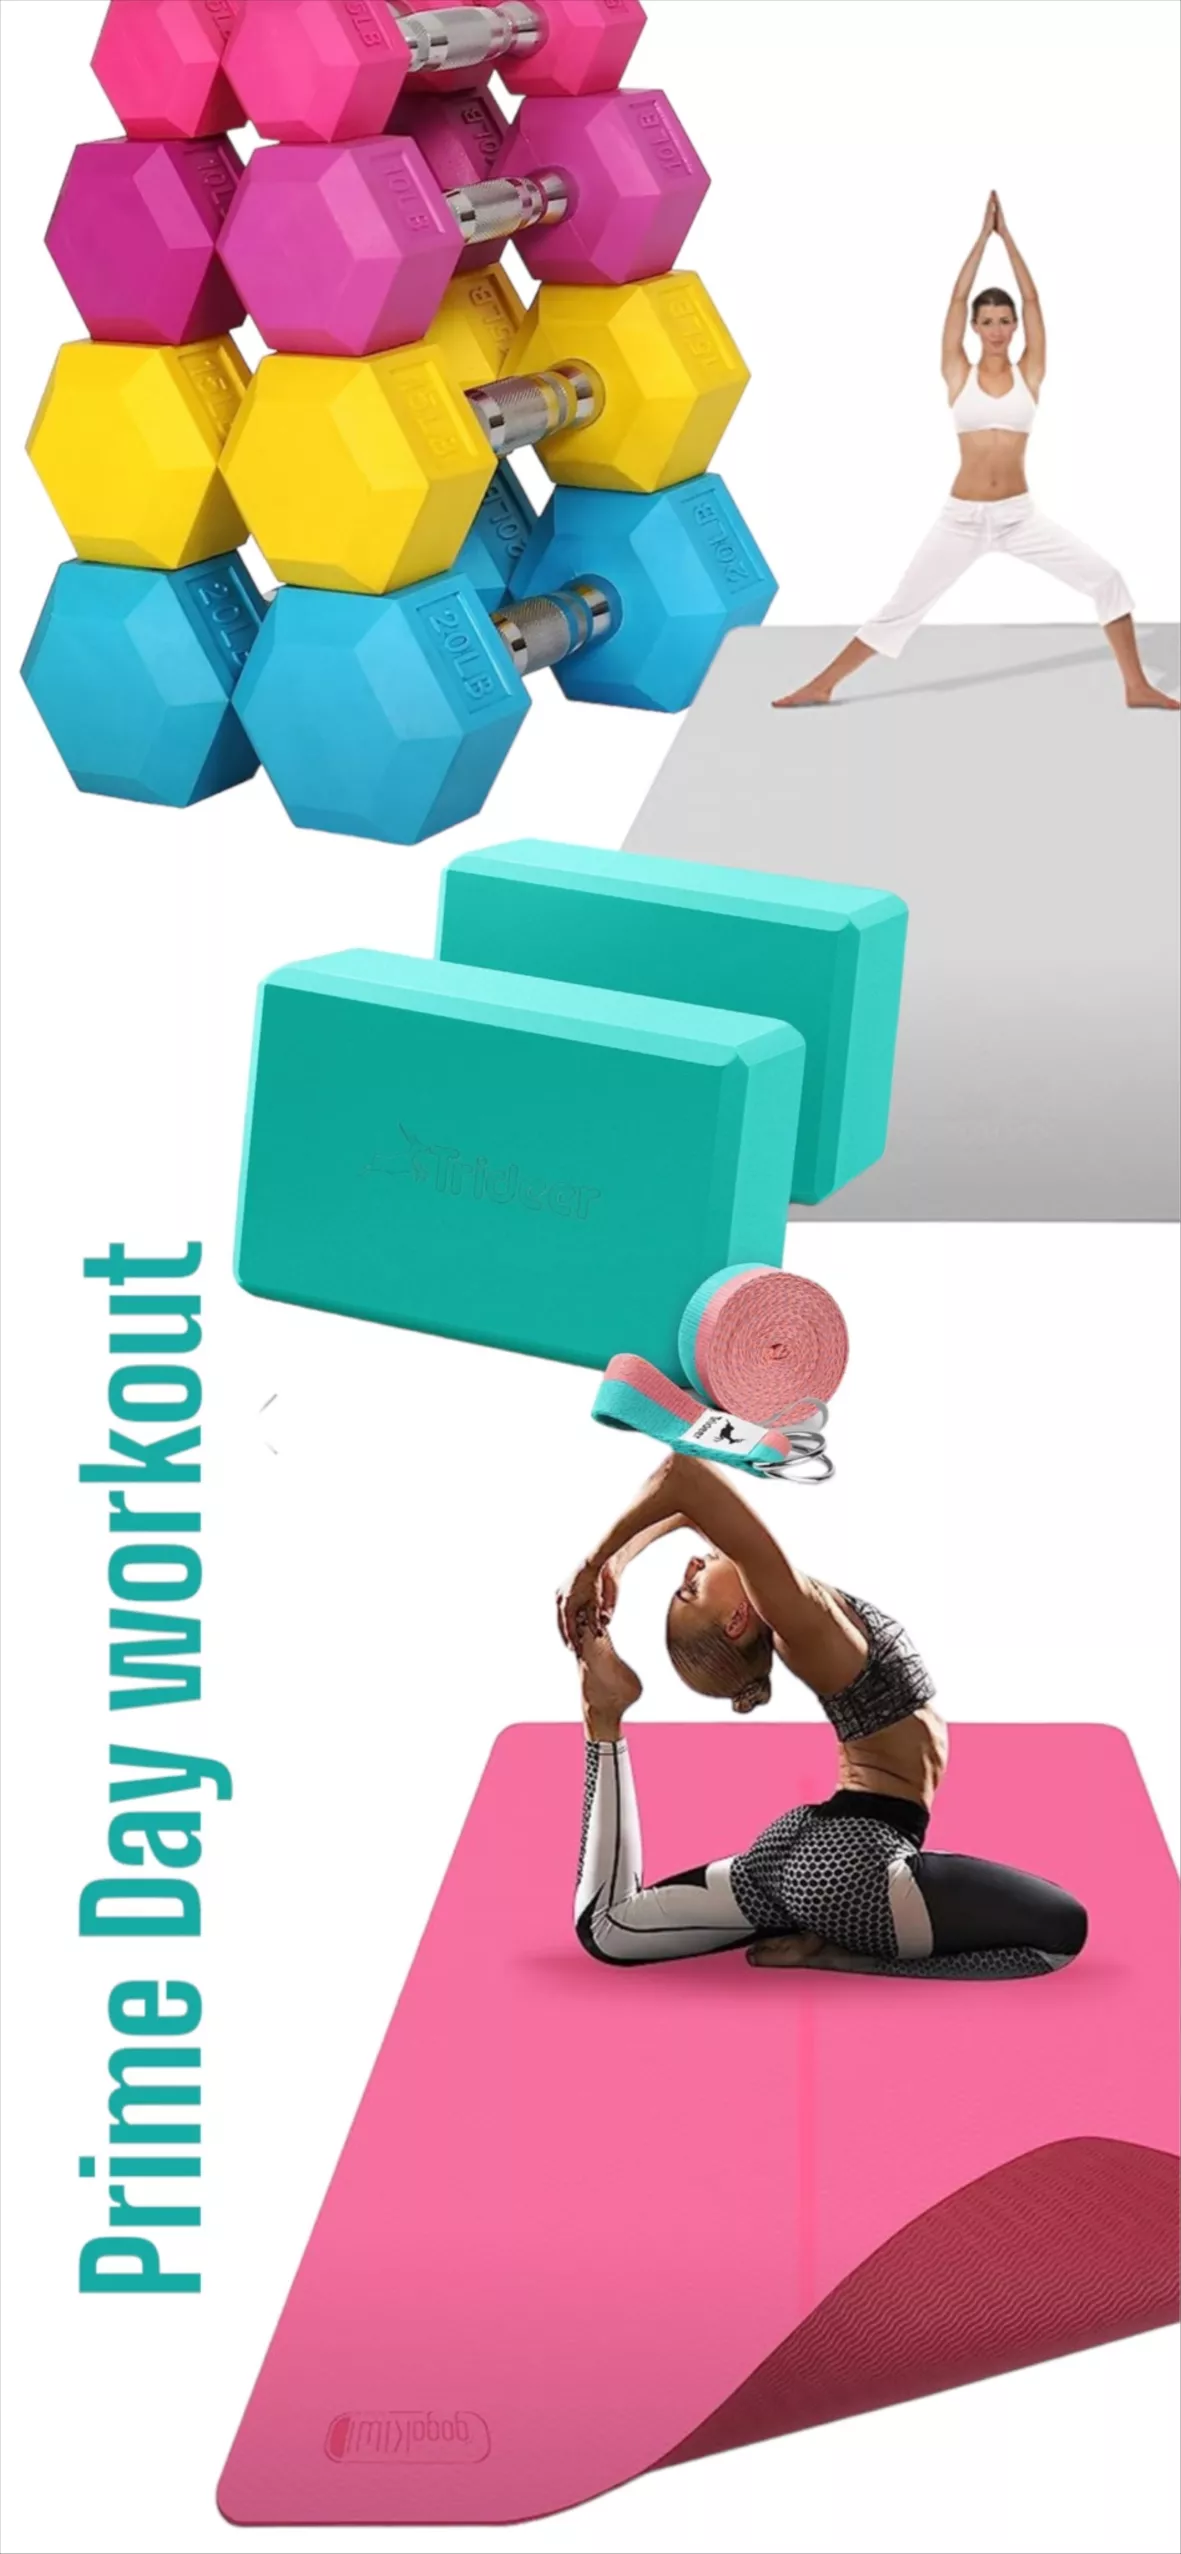 Trideer Yoga Blocks 2 Pack with Strap Yoga Blocks and Strap Set